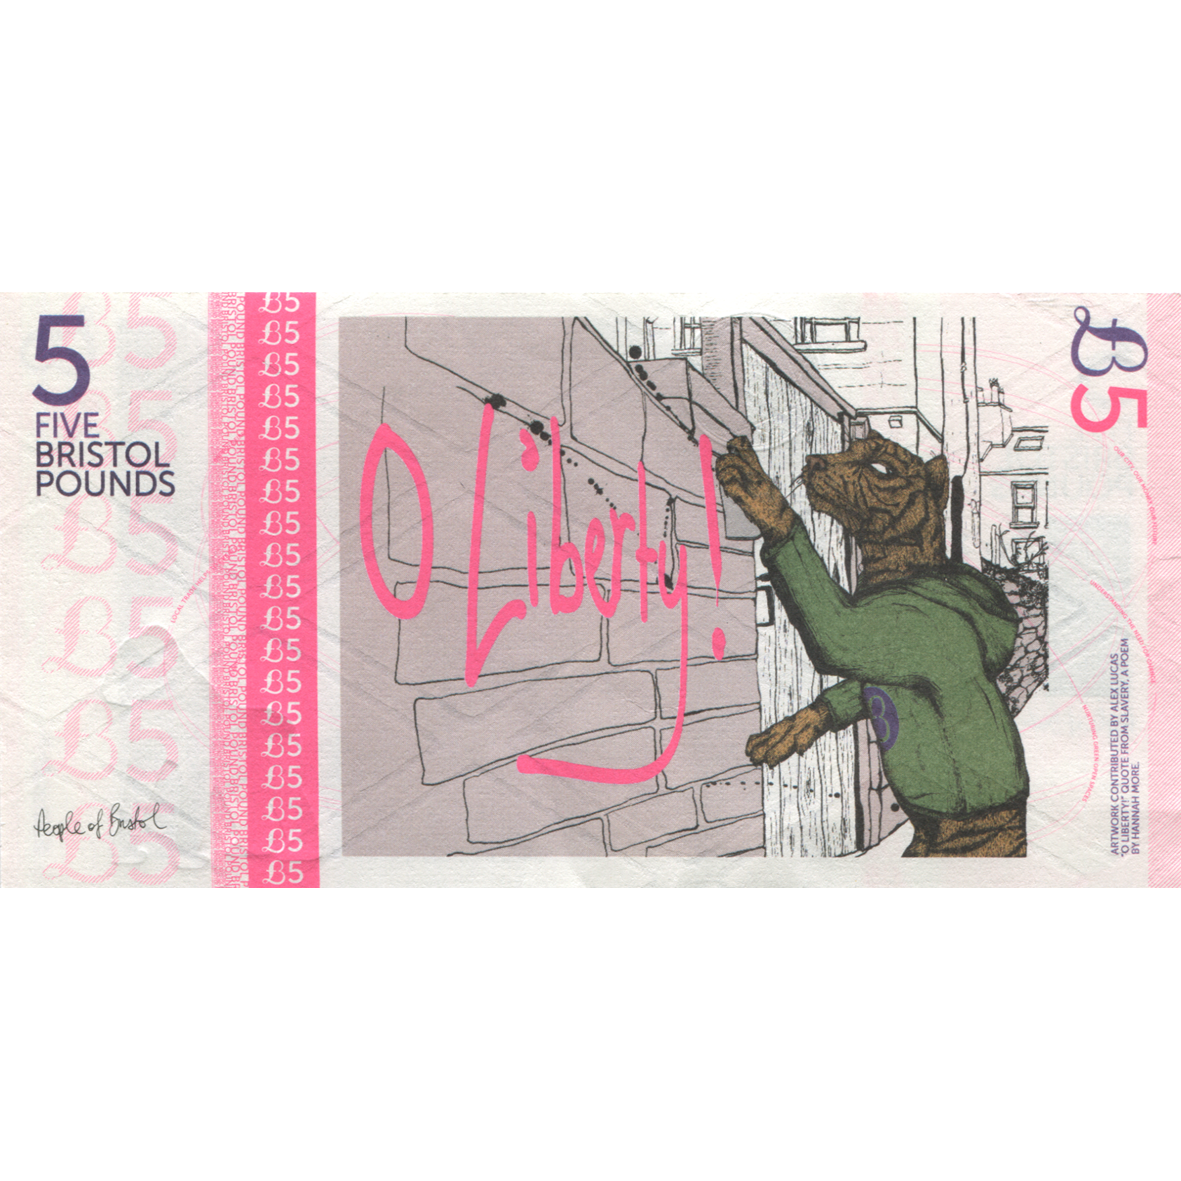 United Kingdom of Great Britain, City of Bristol, 5 Bristol Pounds (2012-2015) (reverse)